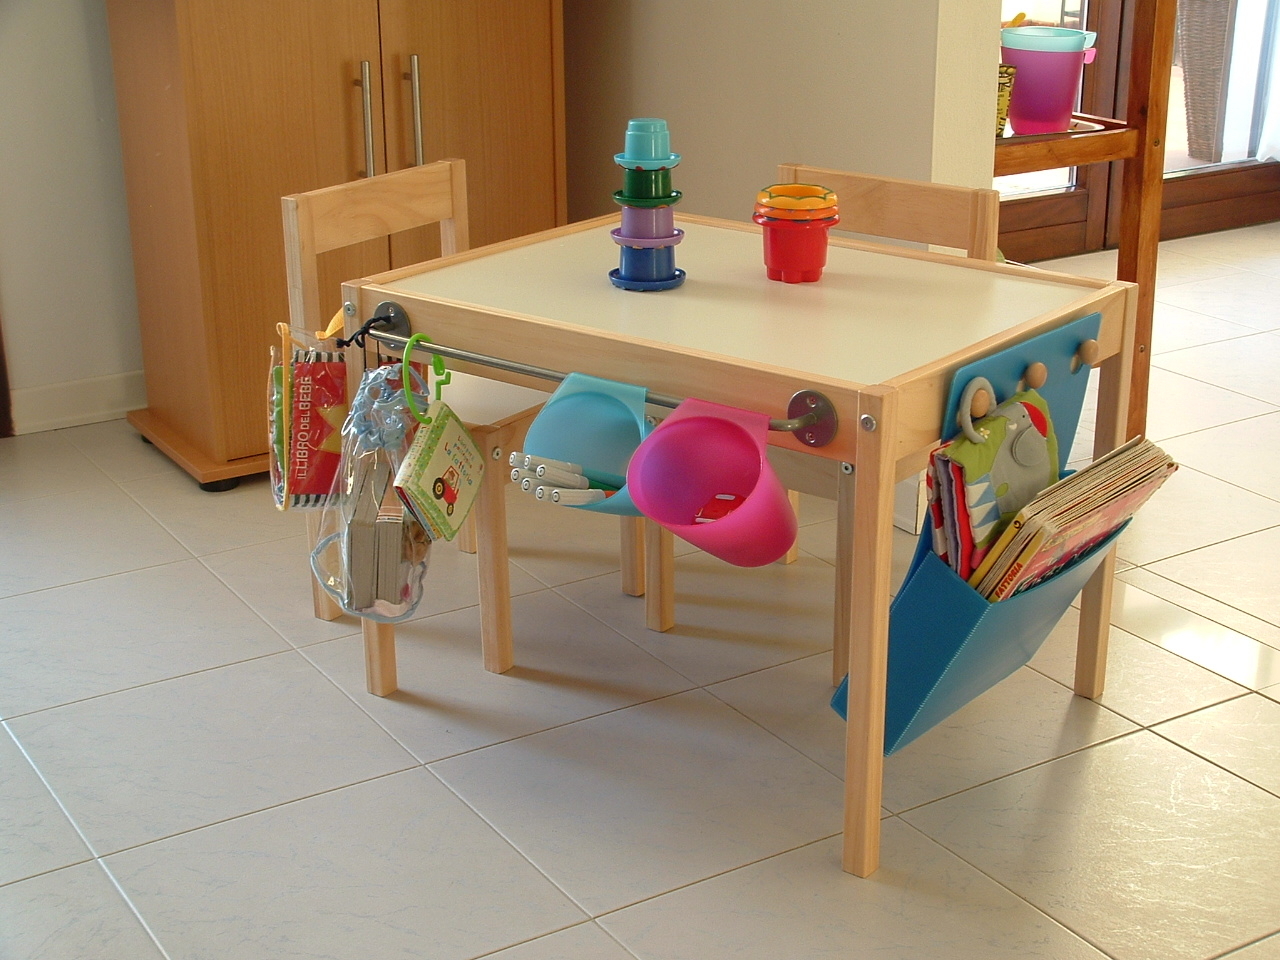 children's table with storage underneath